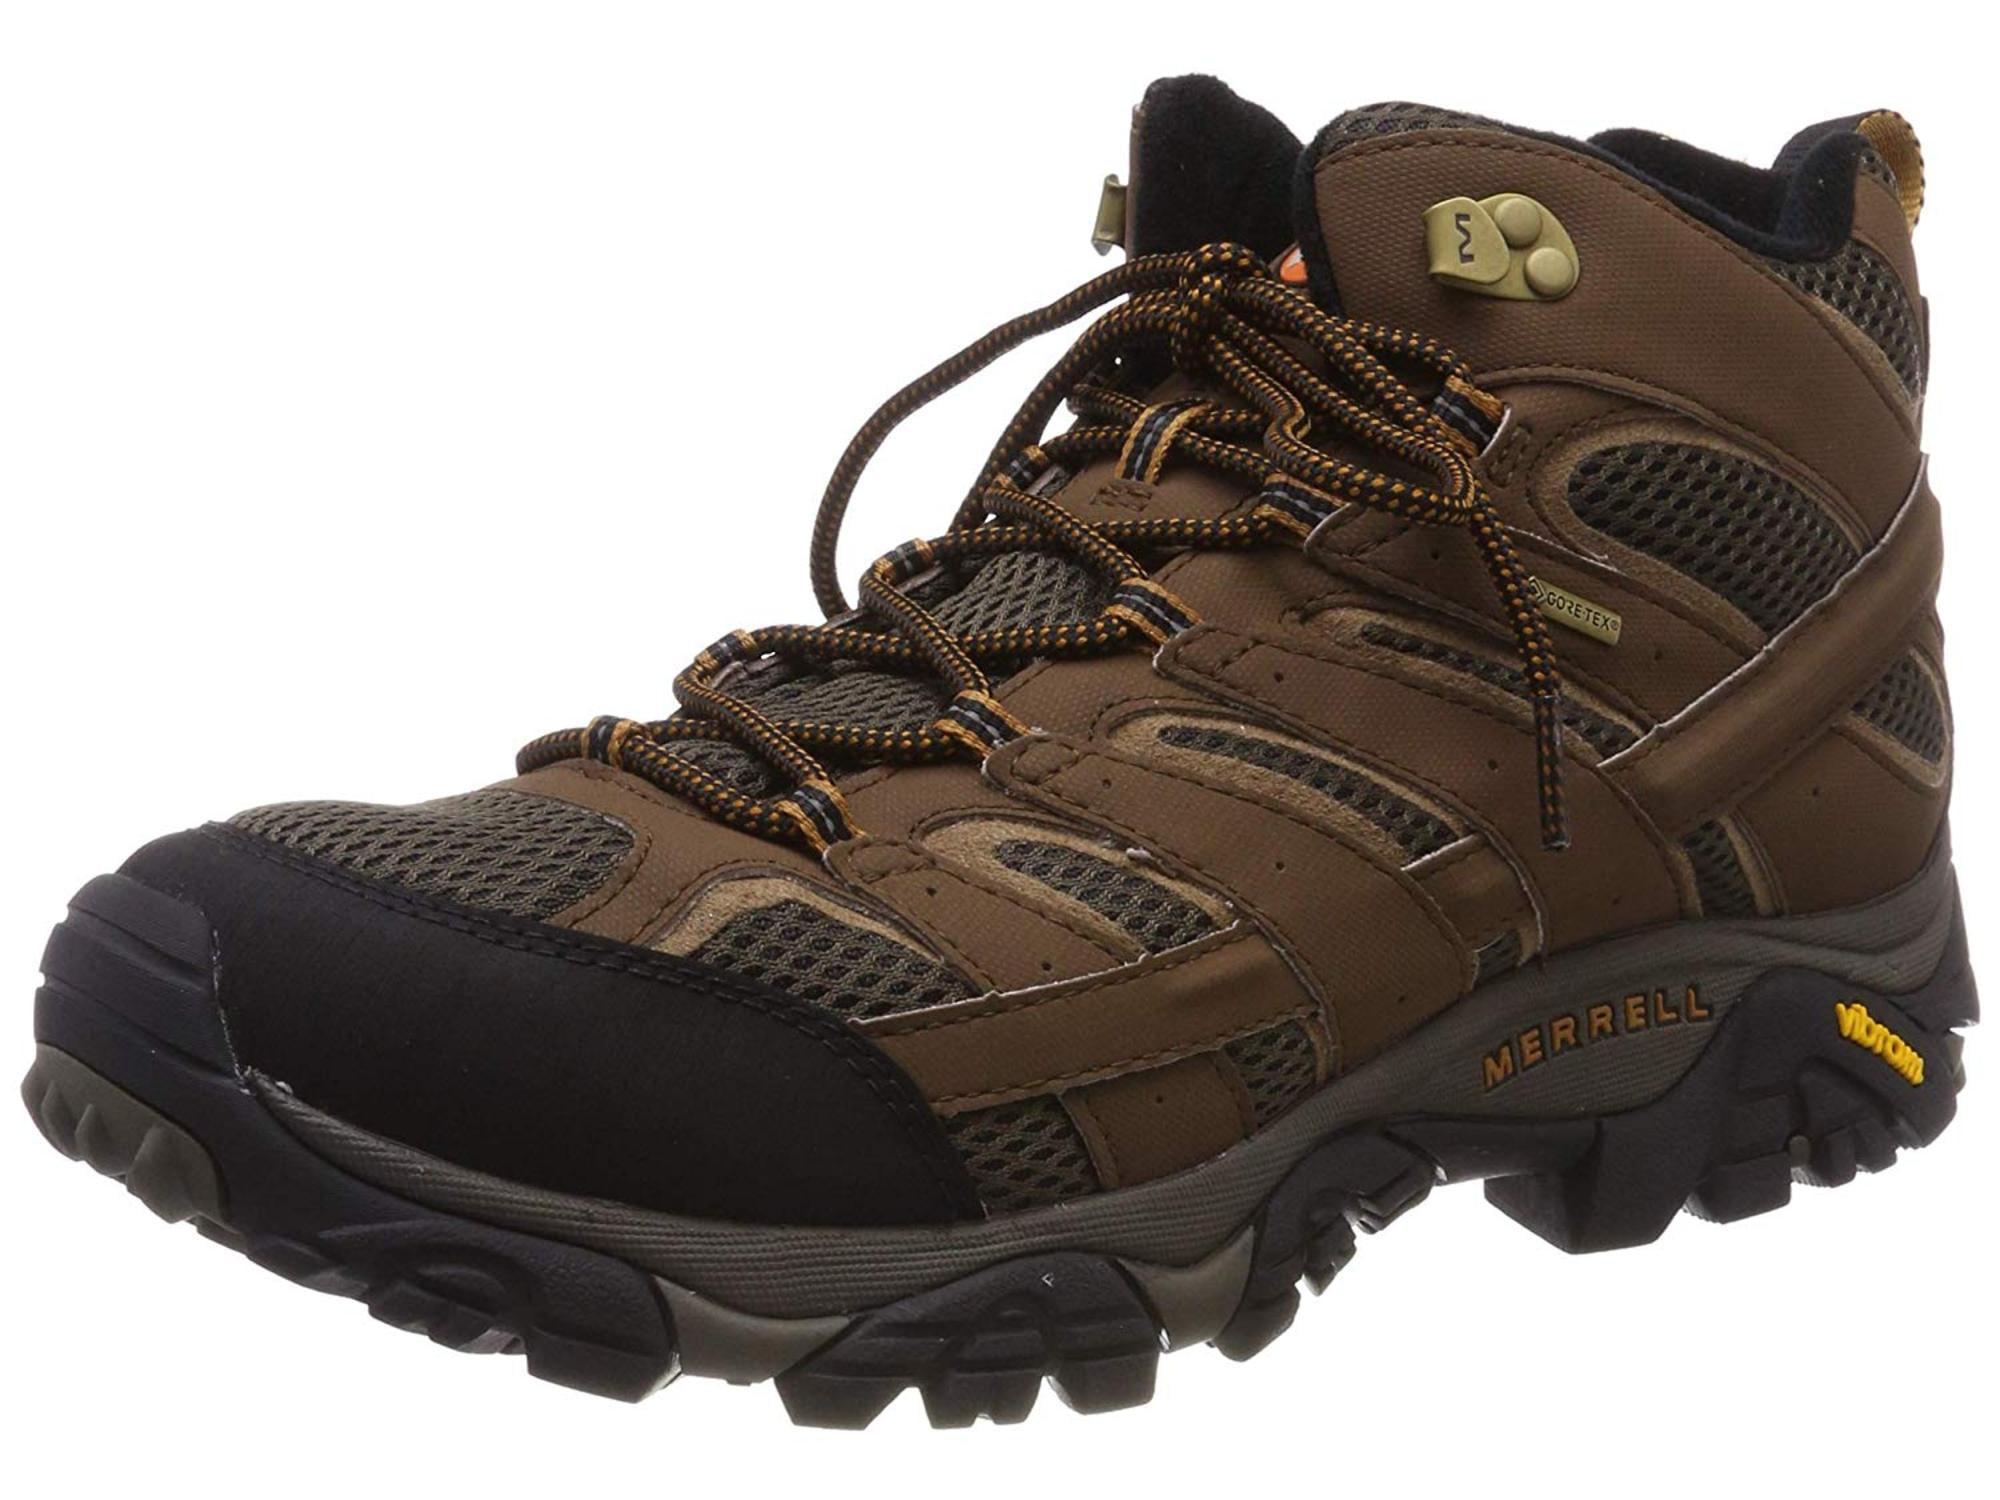 Merrell - Merrell Men's Moab 2 Mid Gtx Hiking Boot, Earth, Size 10.5 ...